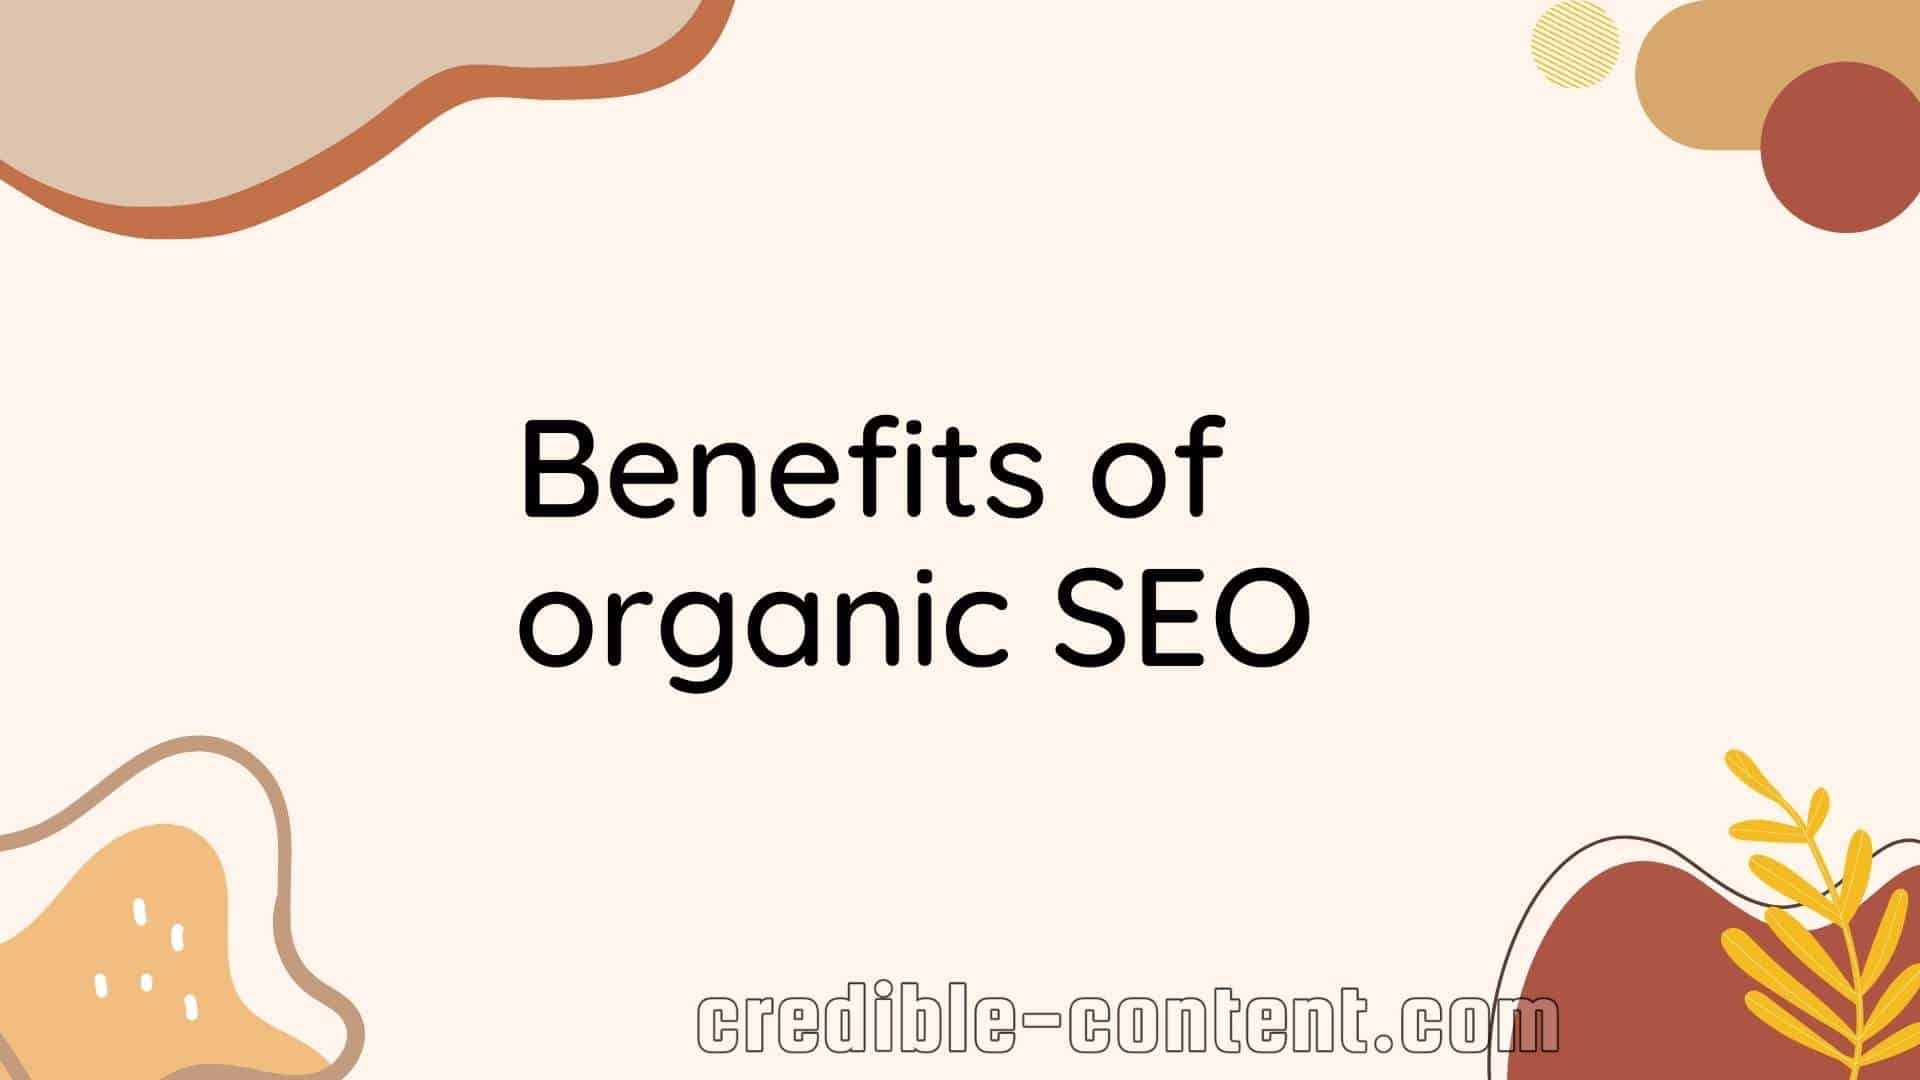 Benefits of organic SEO